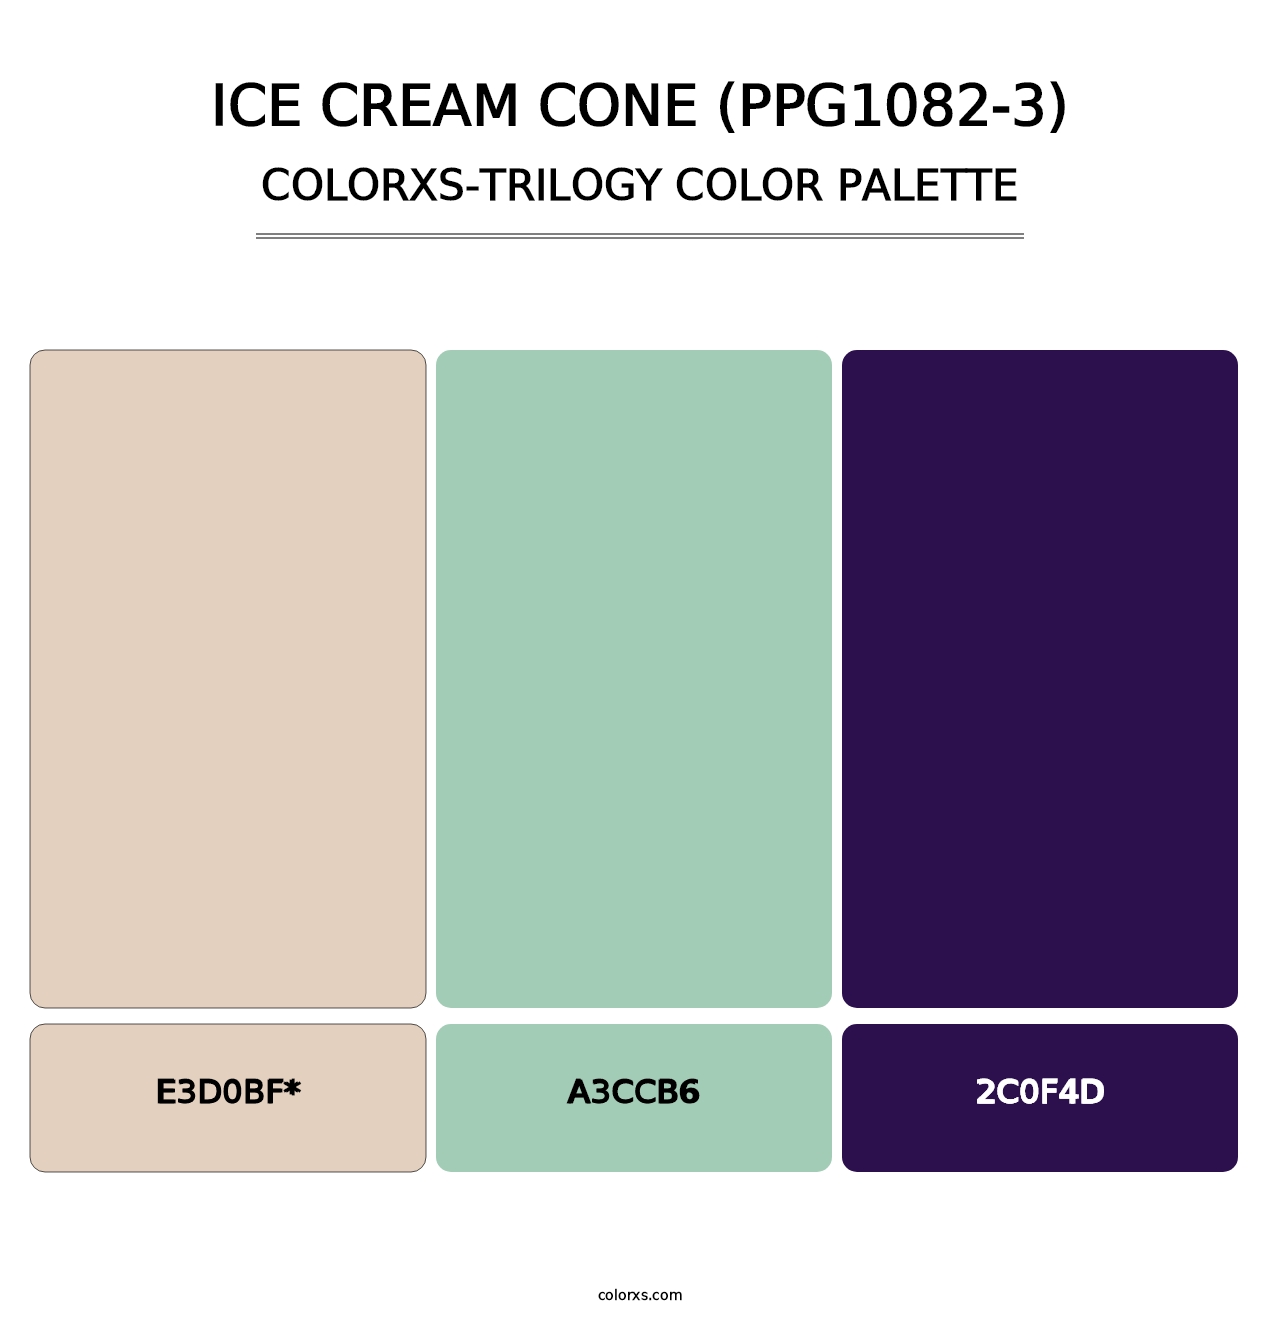 Ice Cream Cone (PPG1082-3) - Colorxs Trilogy Palette